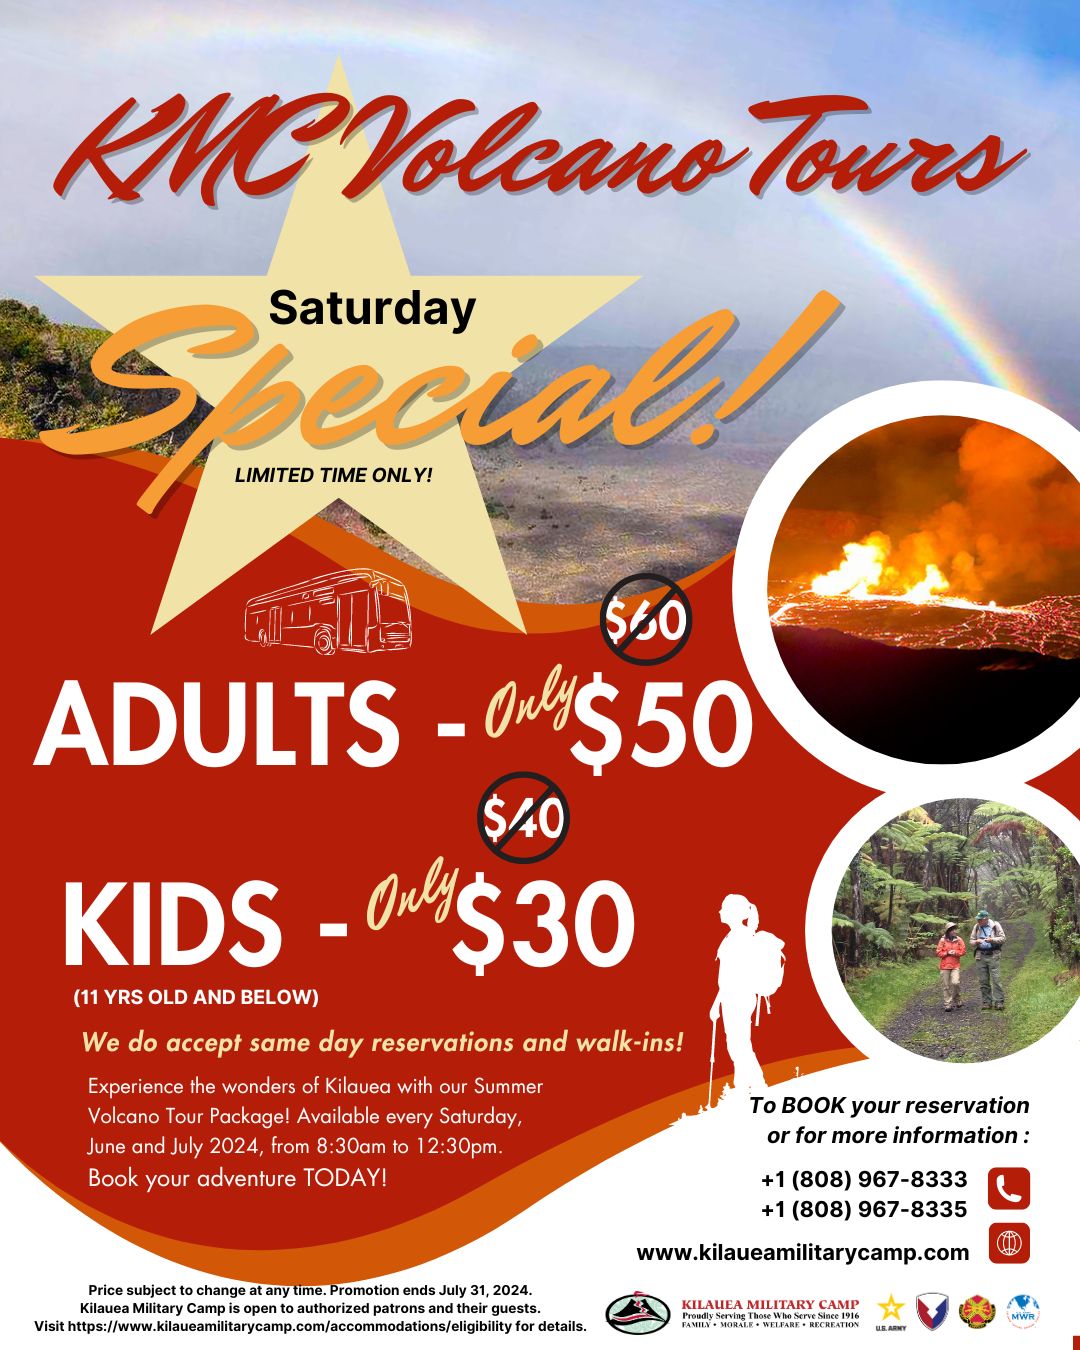 KMC VOLCANO Tour PROMO Flyer (1080 x 1350 px).jpg